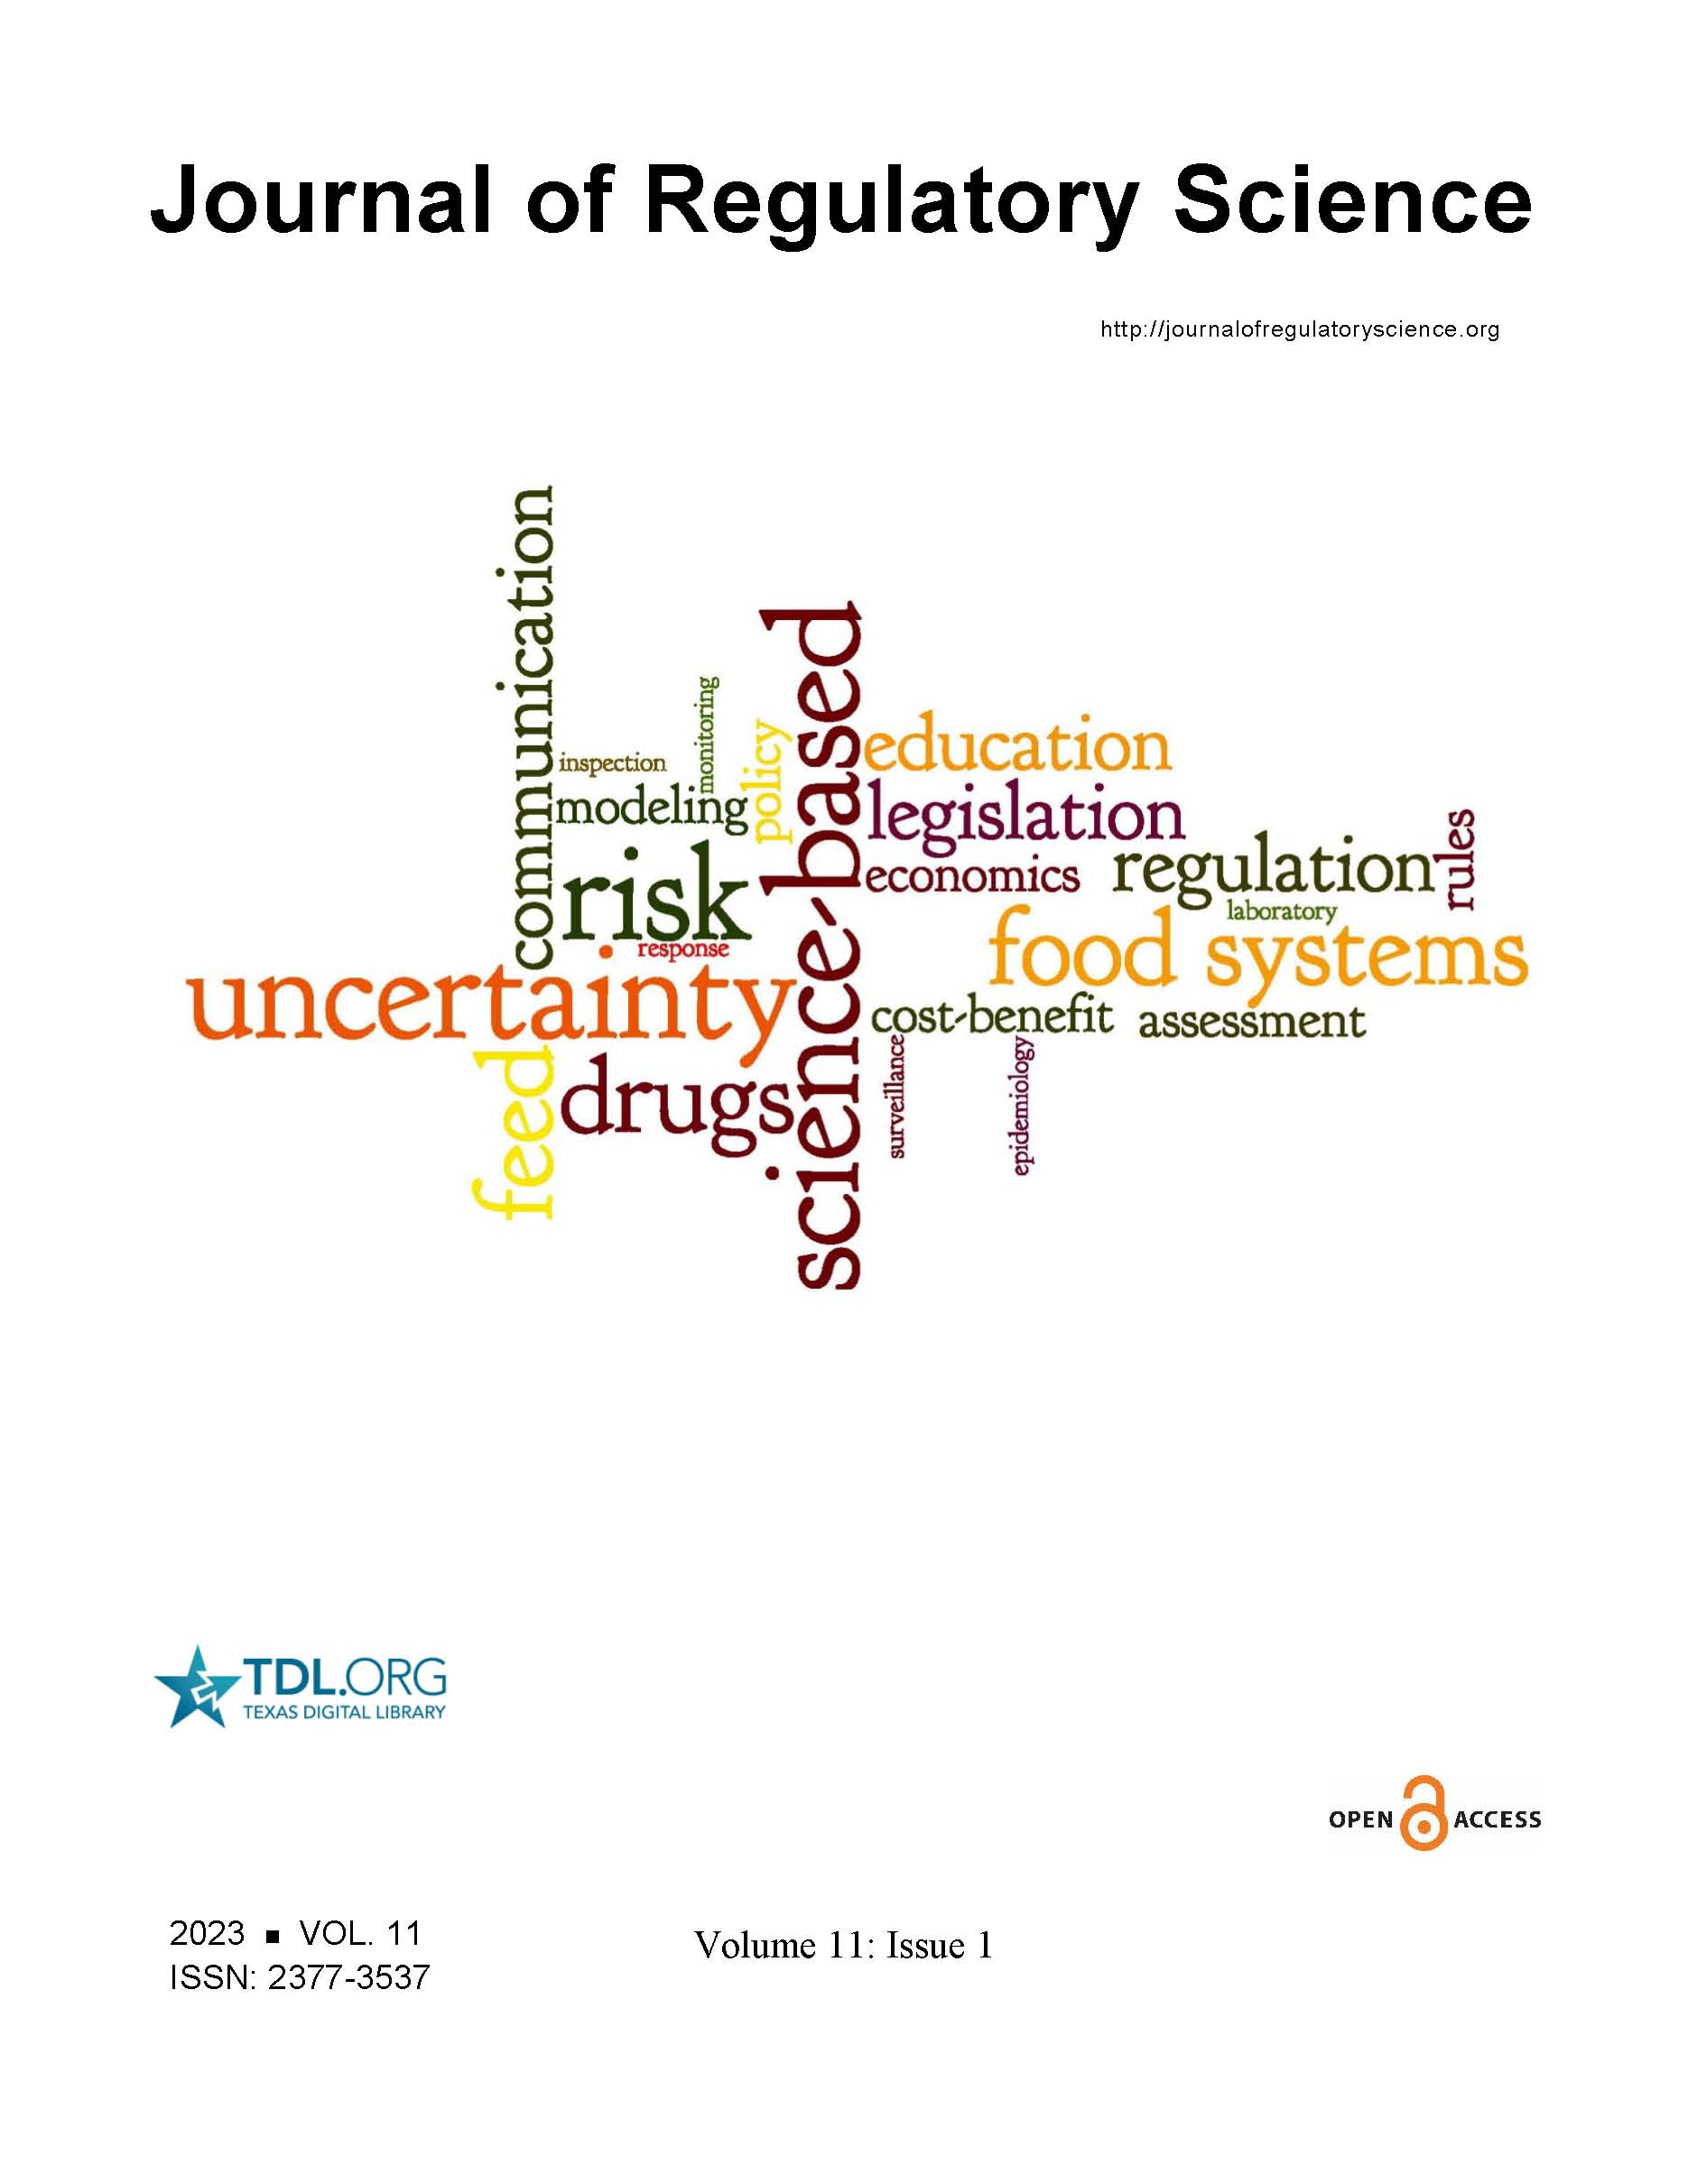 Journal of Regulatory Science Volume 11, Issue 1